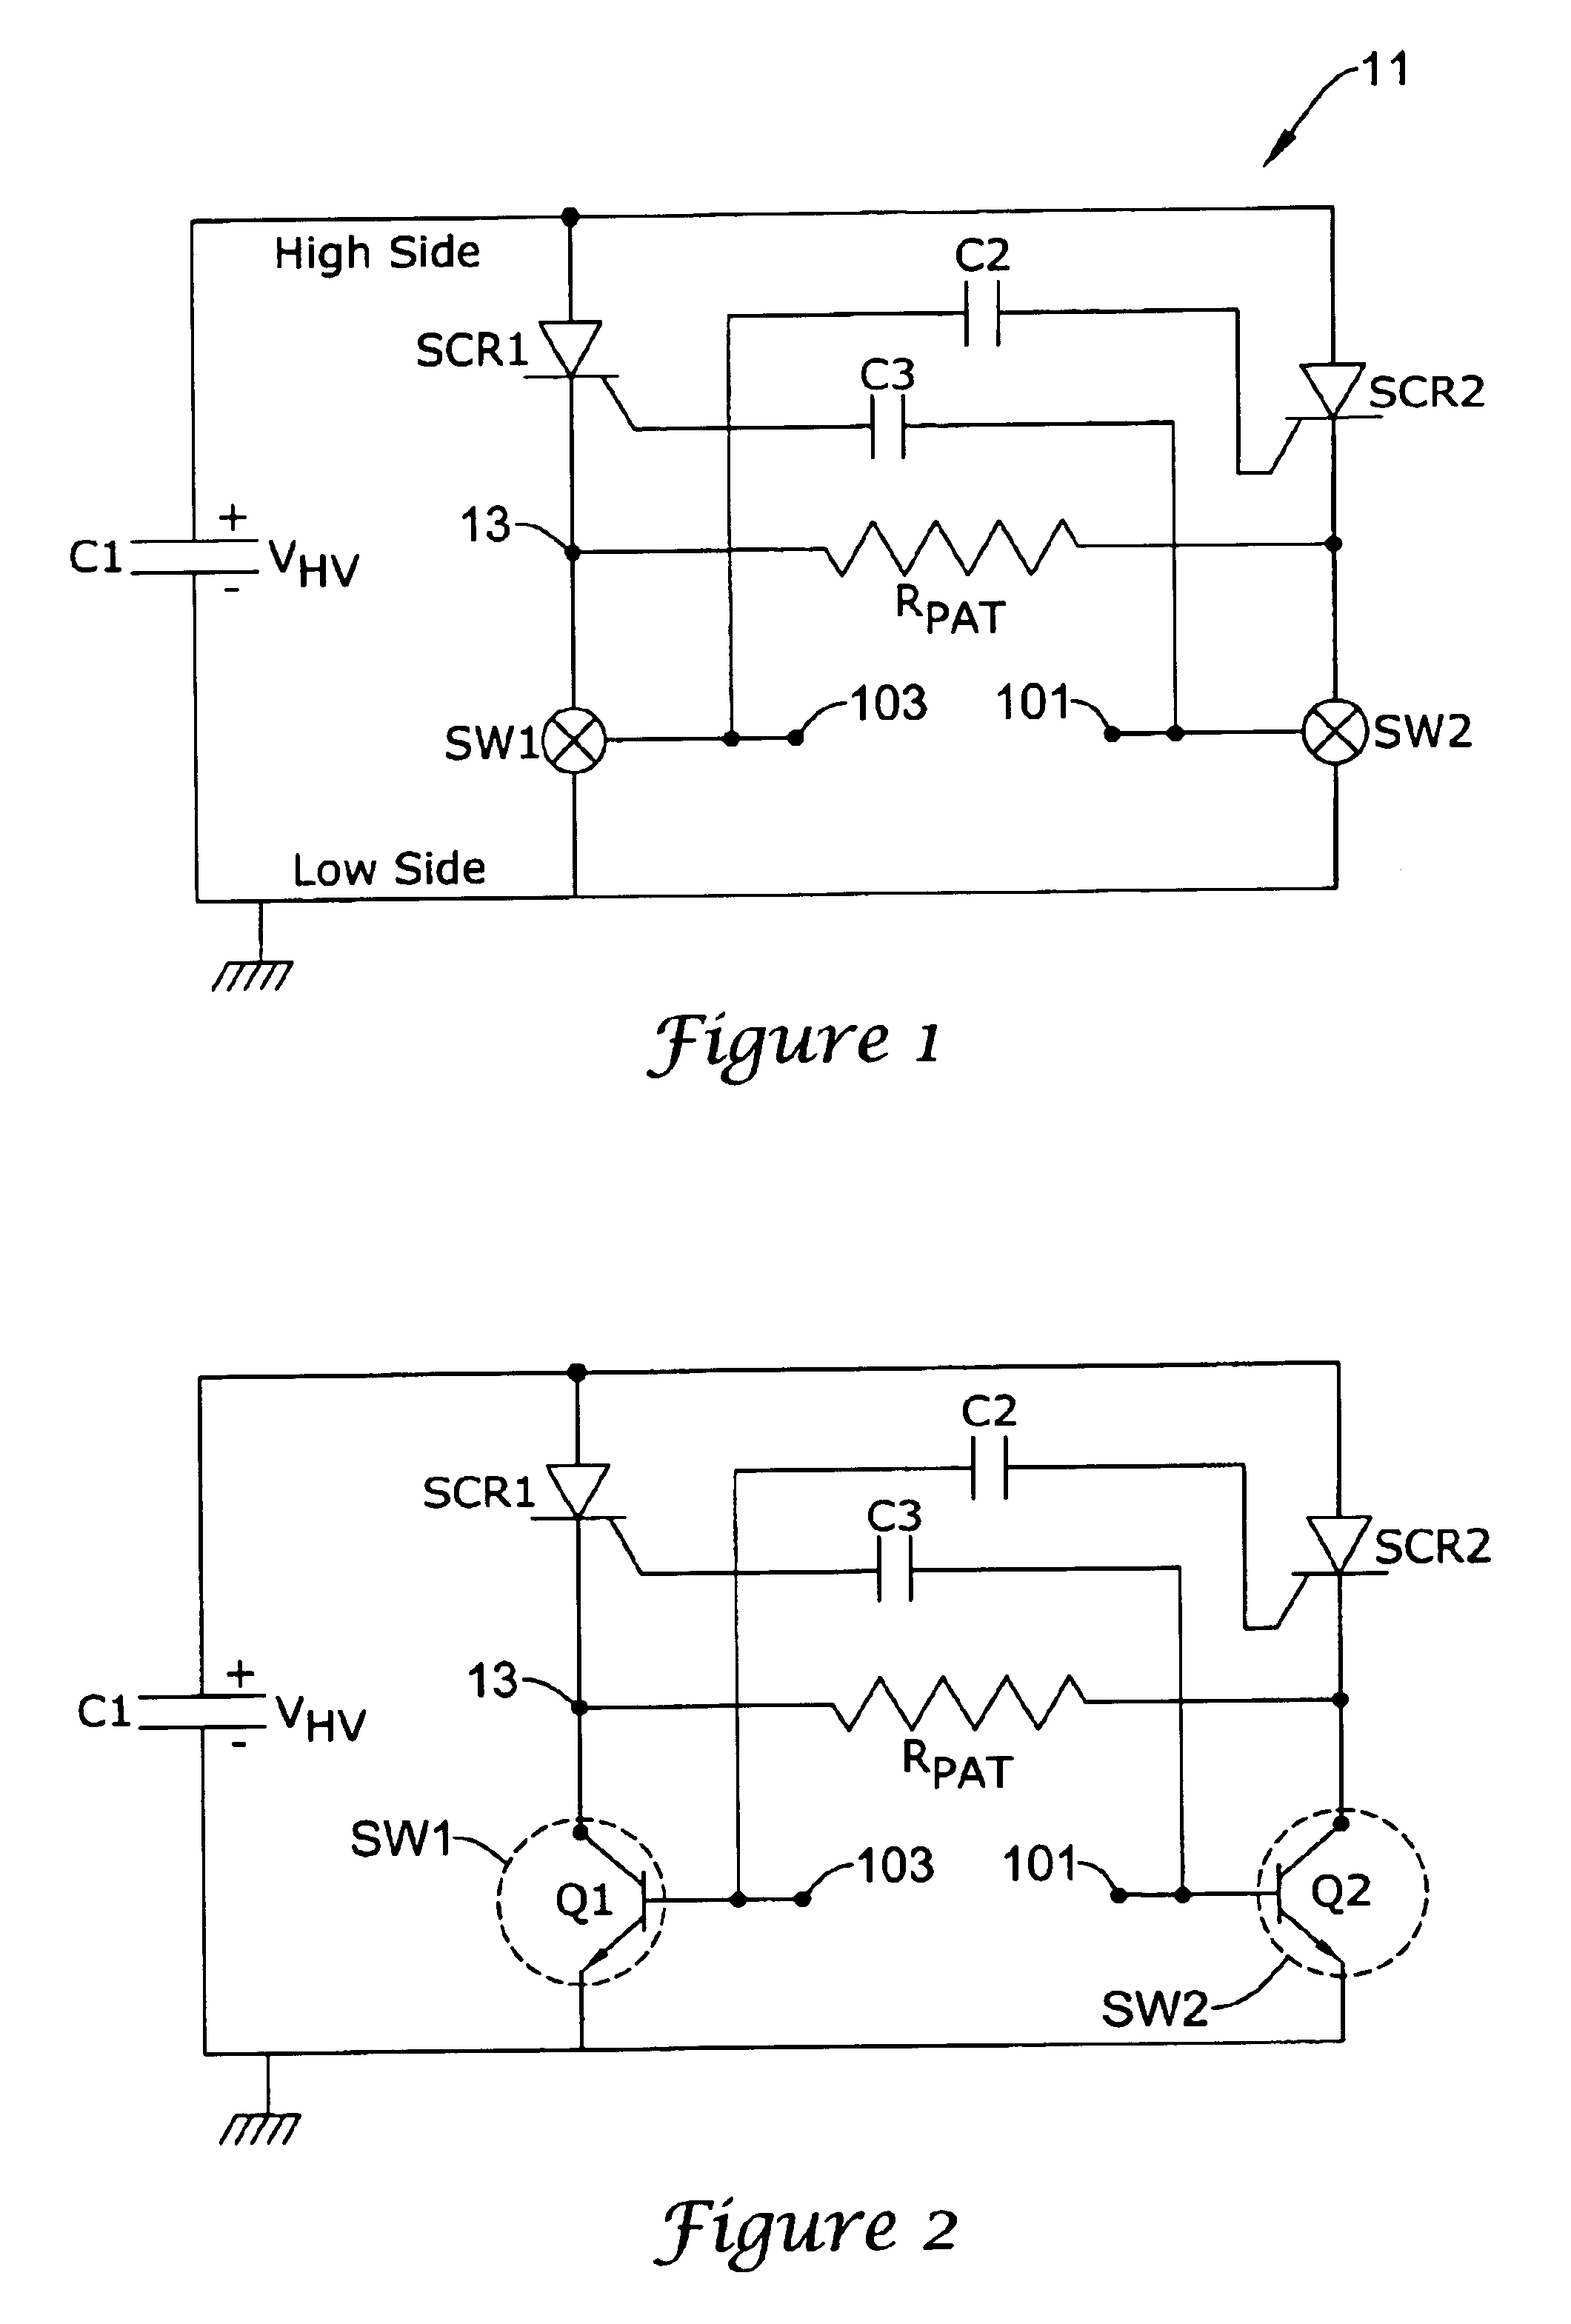 Simplified defibrillator output circuit